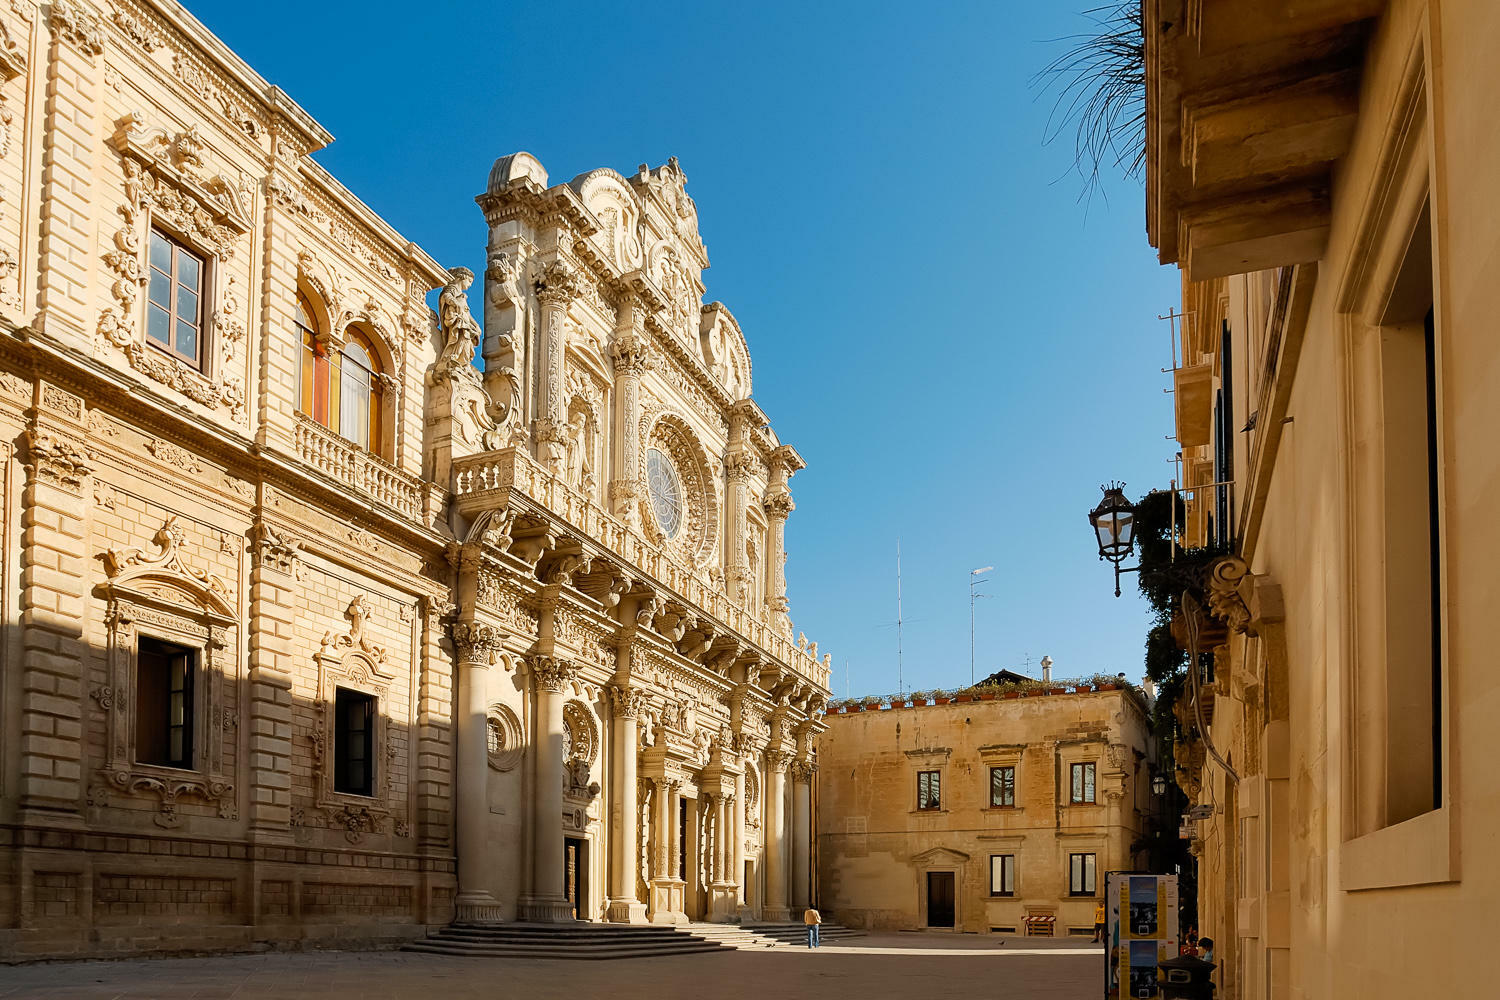 Lecce - old town - Santa Croce church